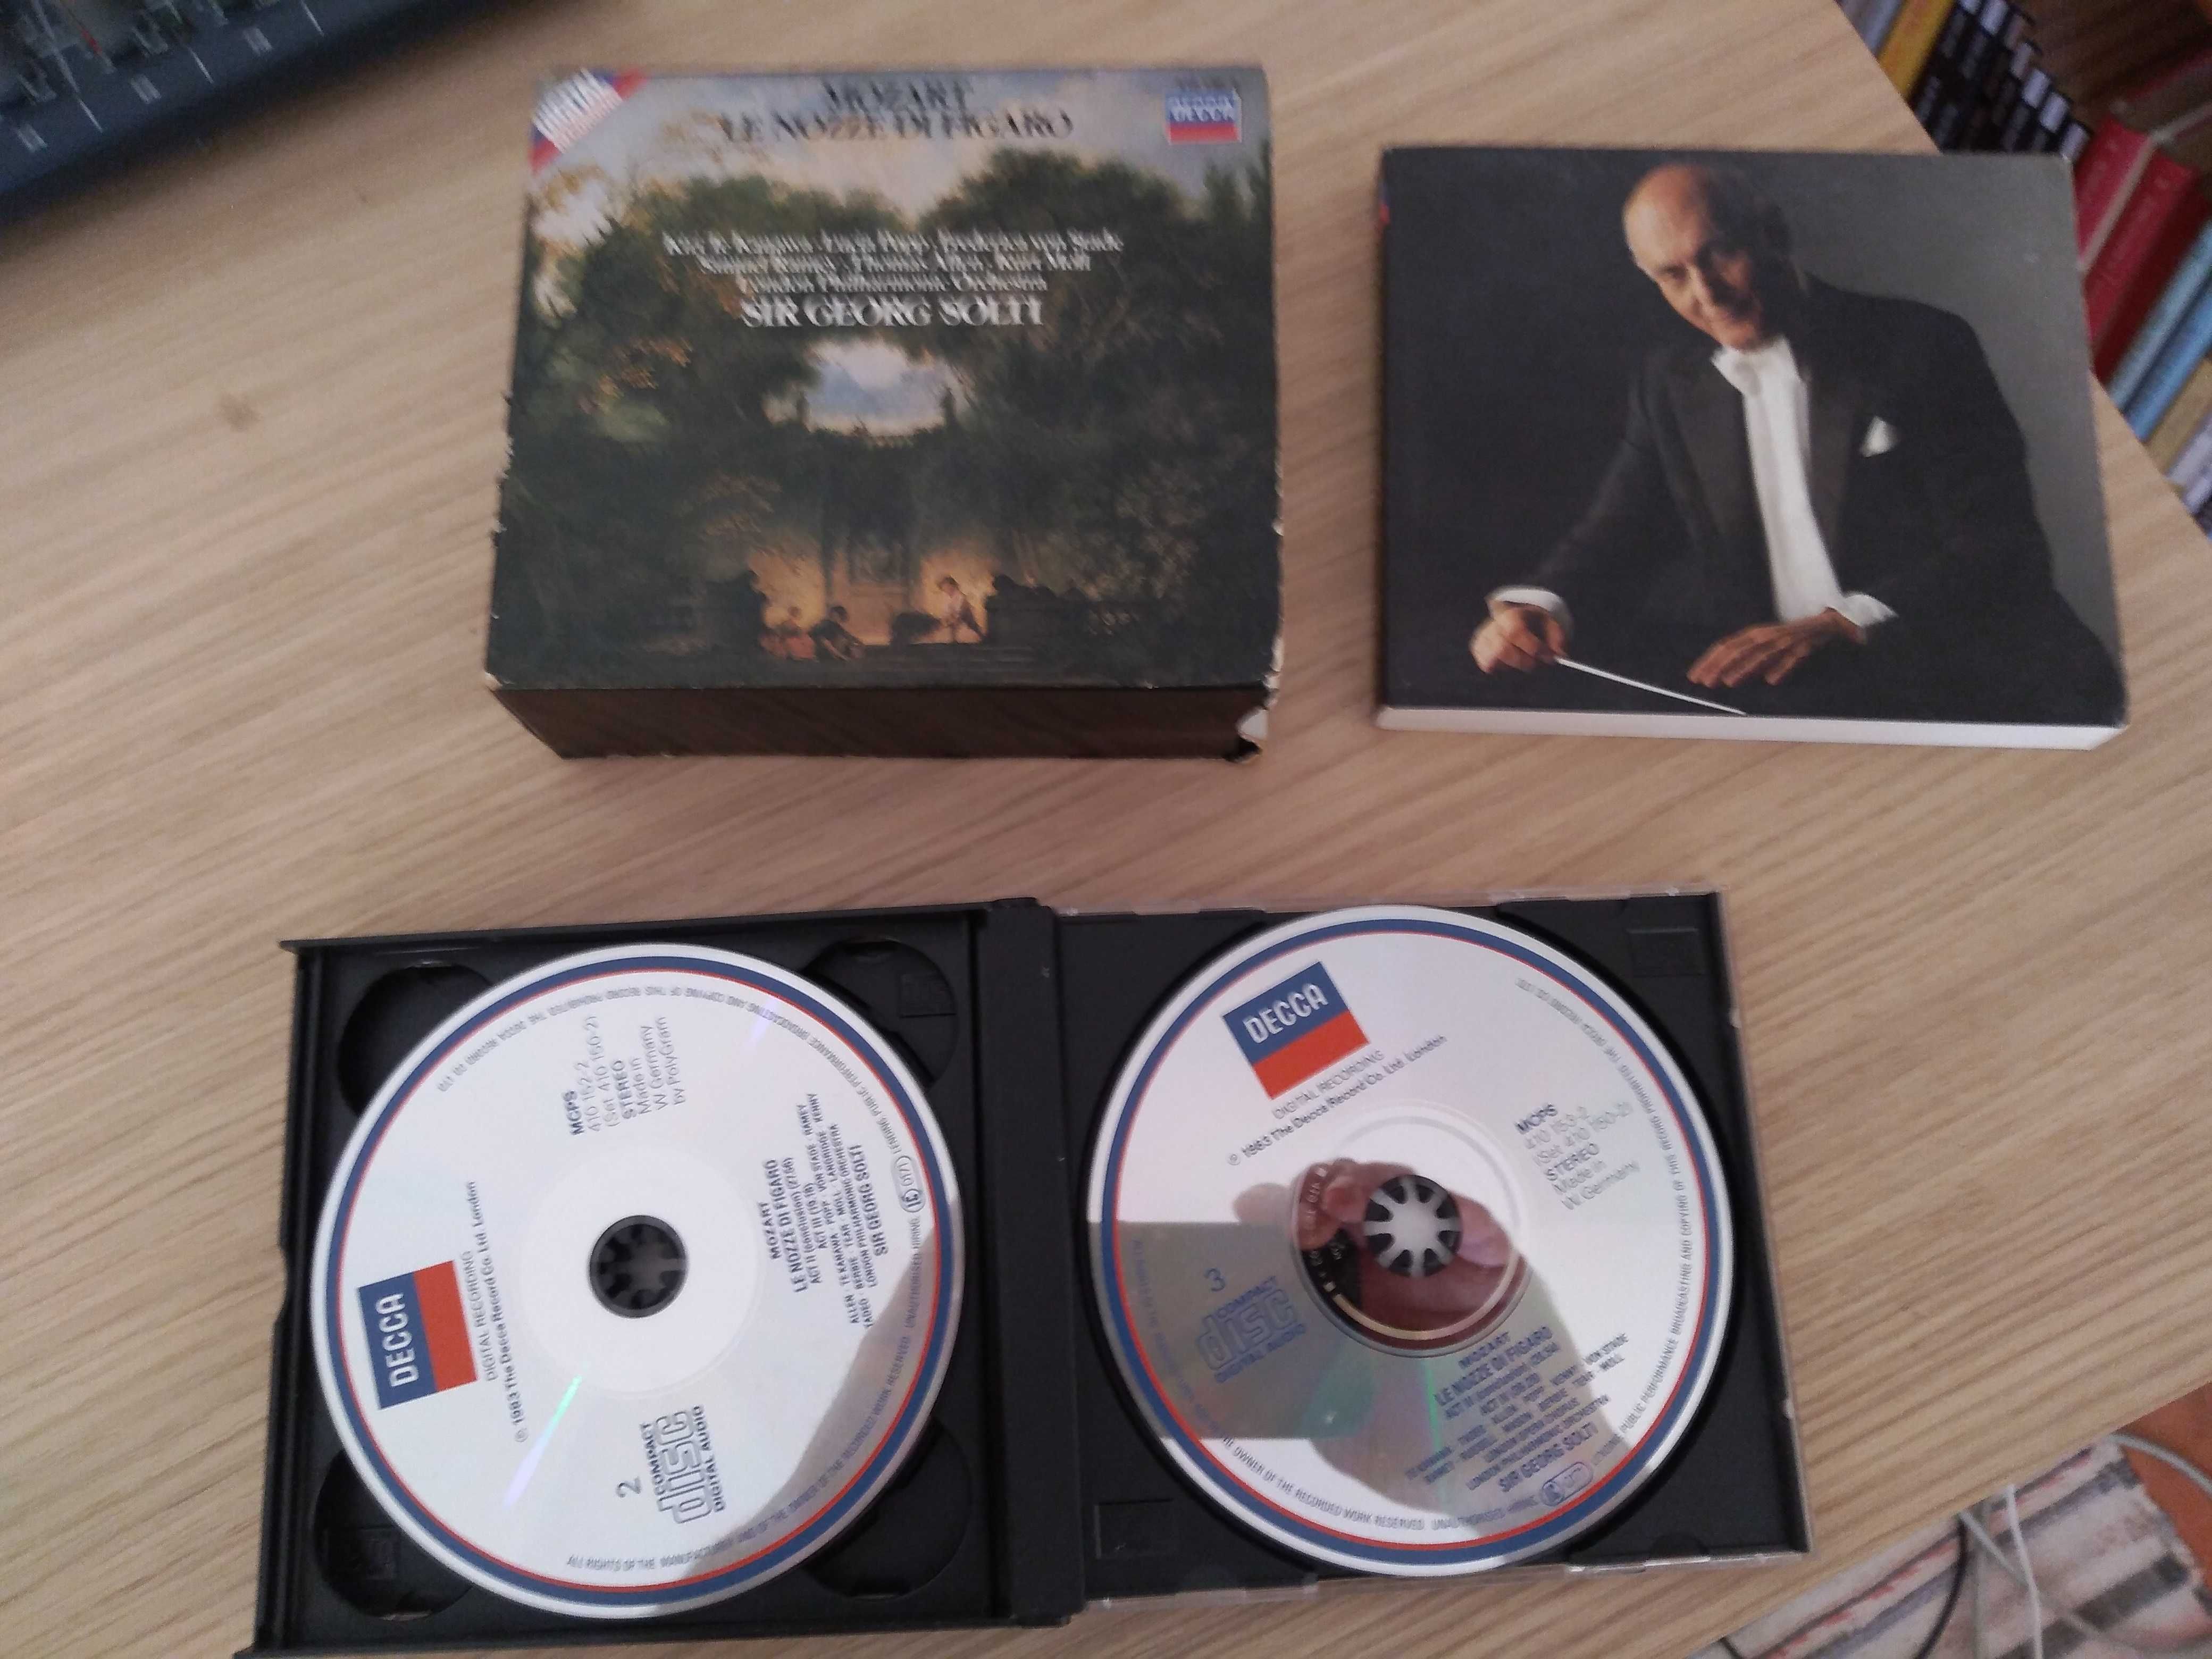 triplo CD de Mozart - Le nozze di figaro